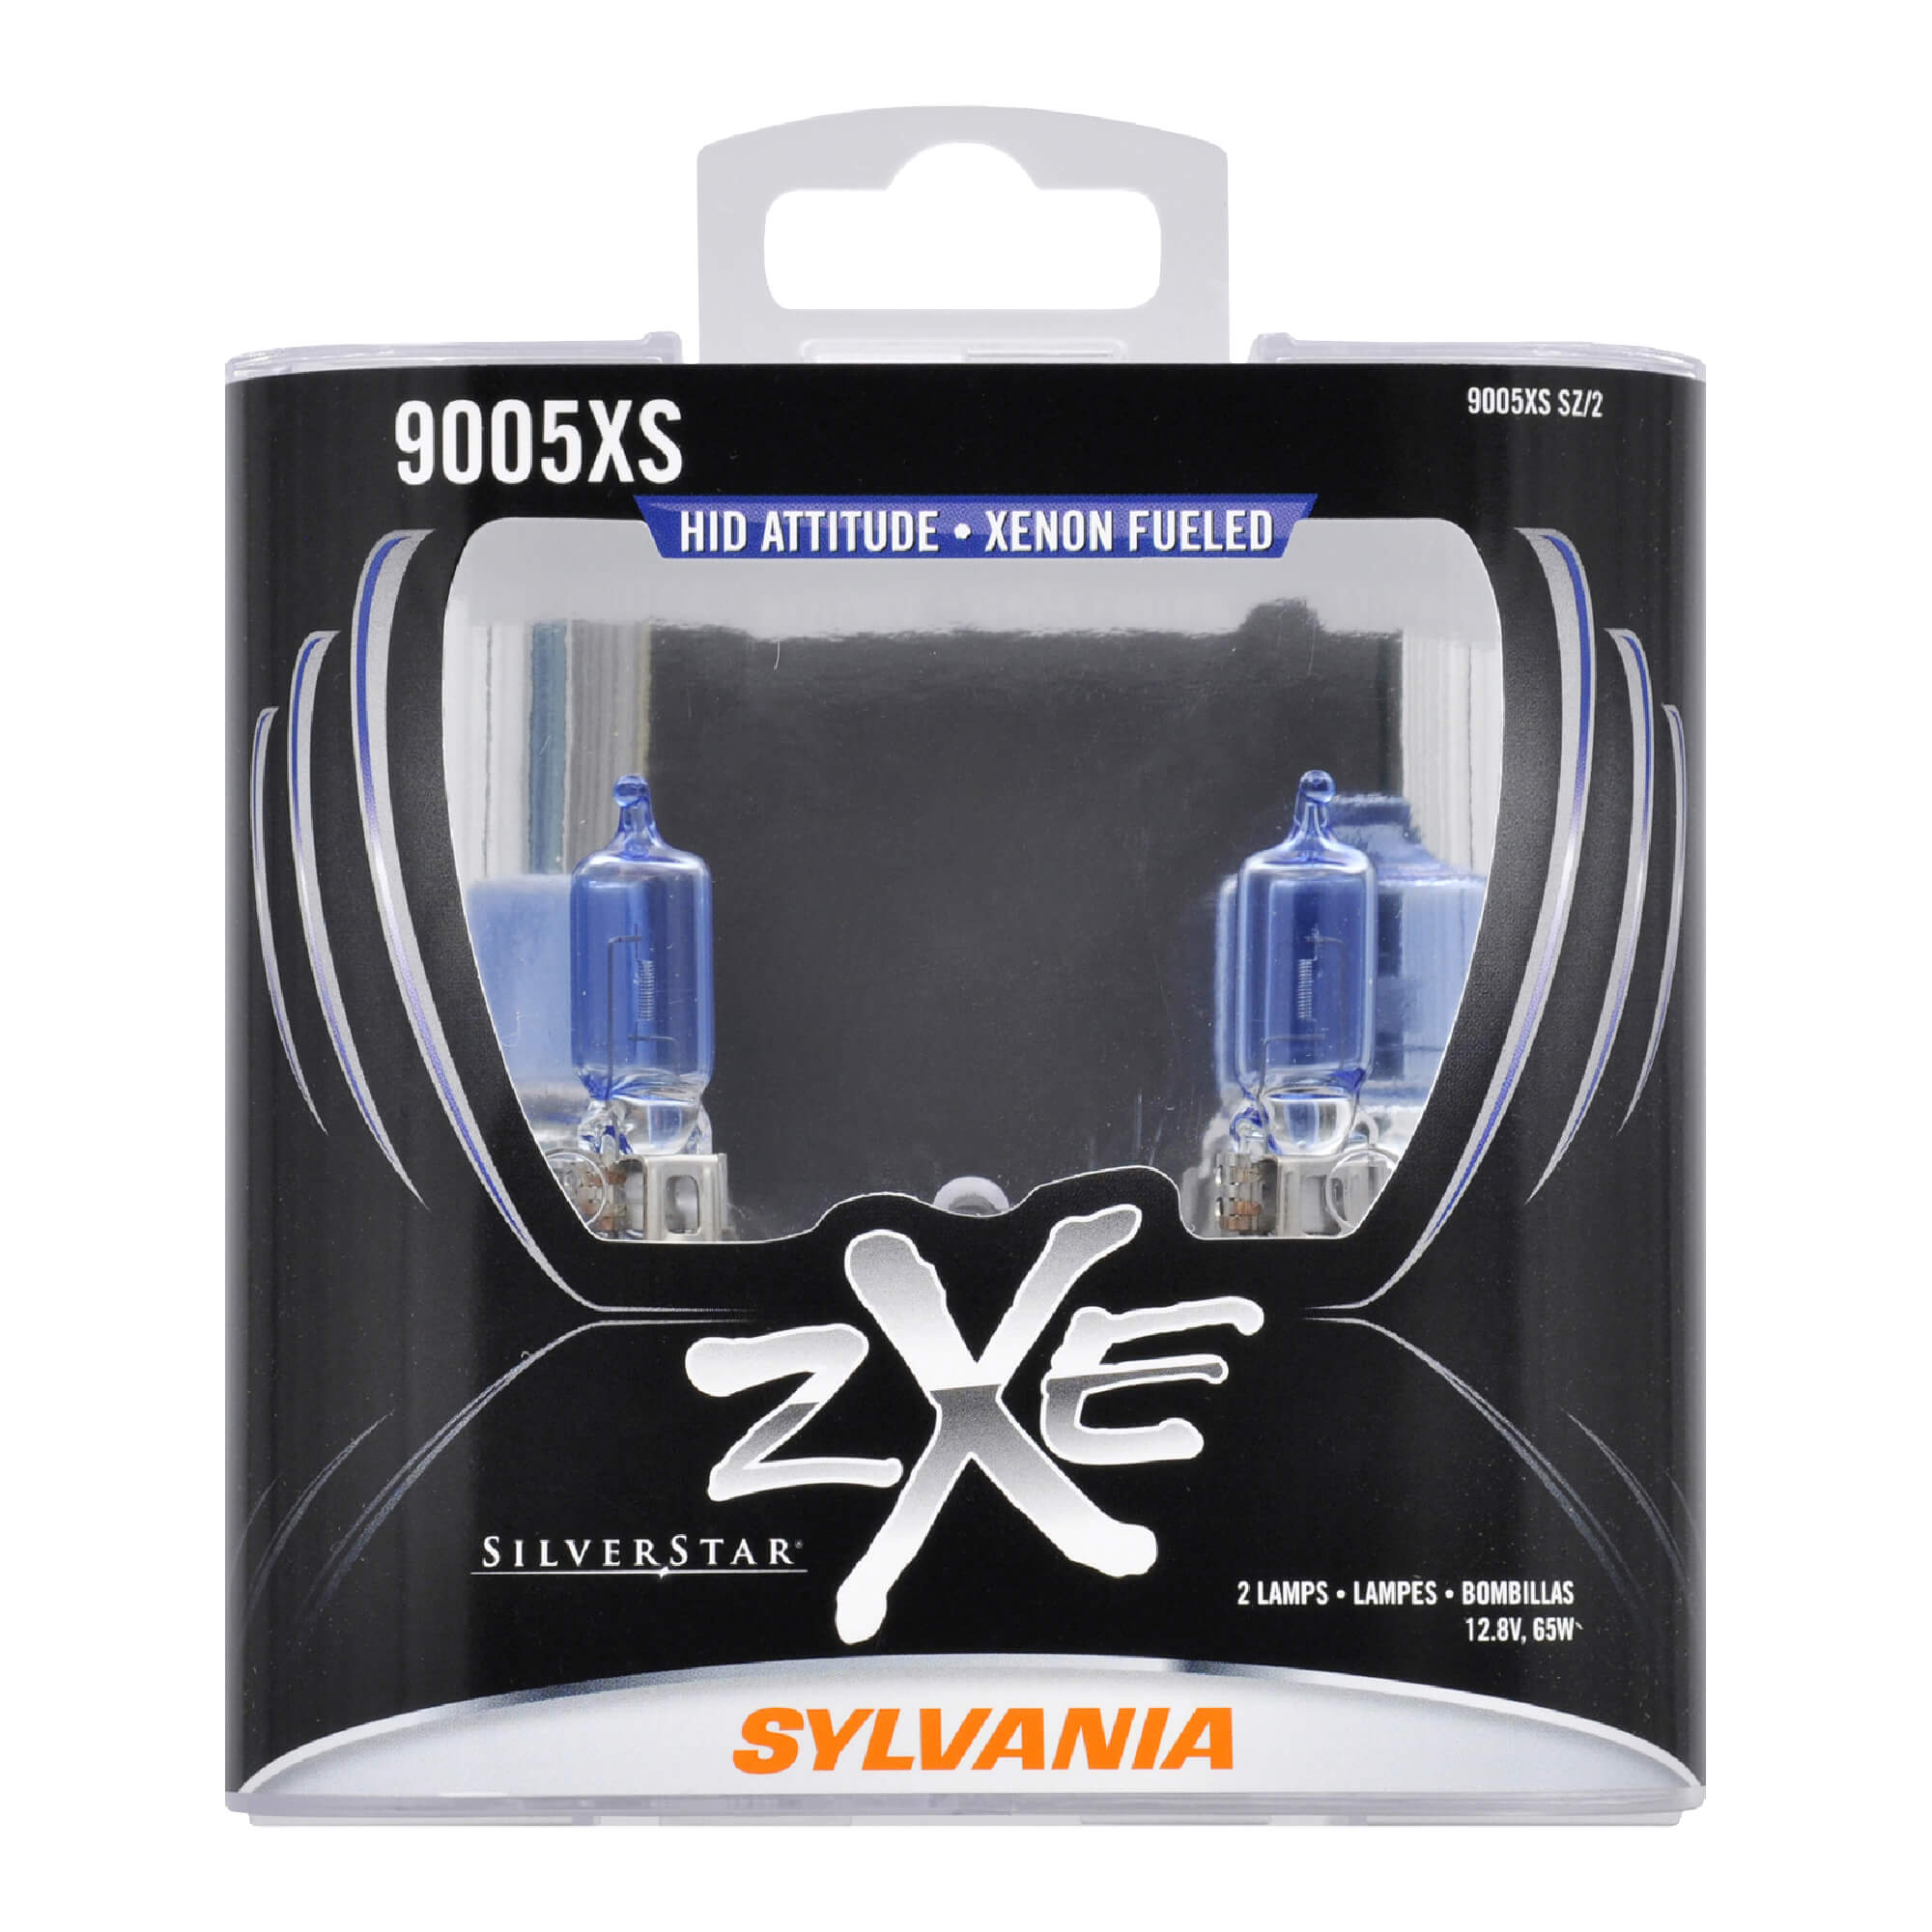 SYLVANIA 9005XS SilverStar zXe Halogen Headlight Bulb, 2 Pack